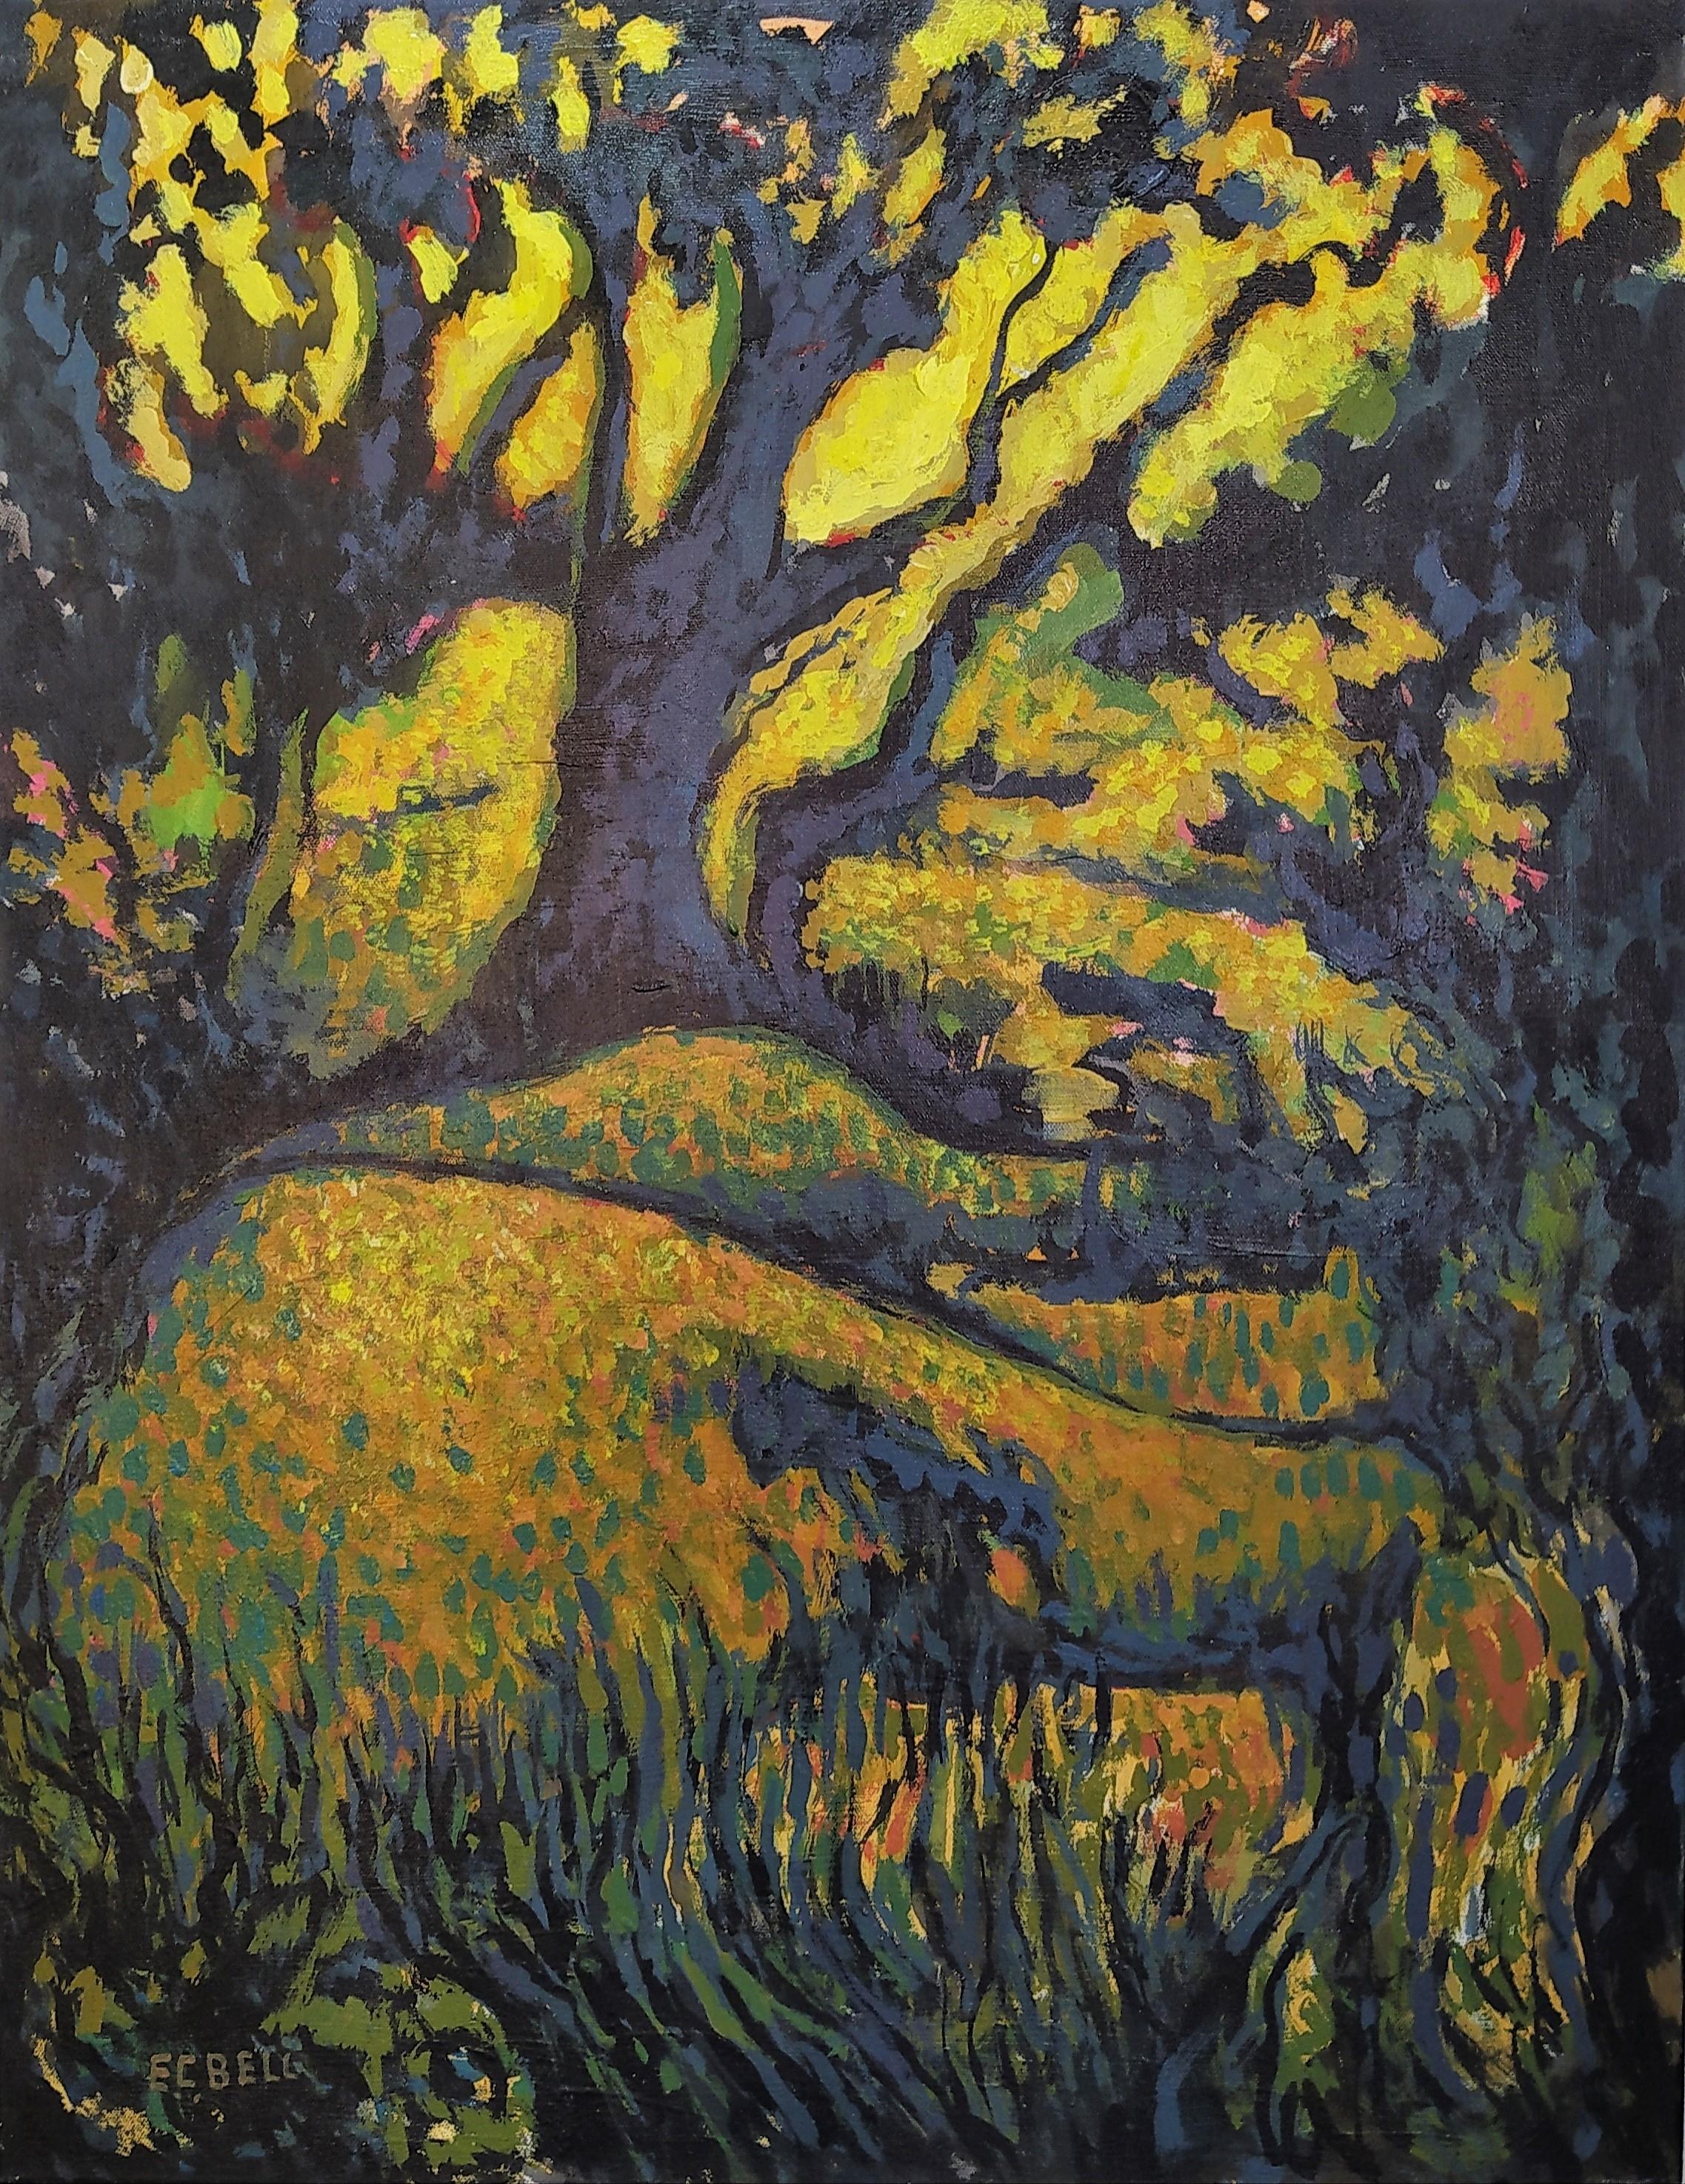 E.C. Bell Landscape Painting - "Yellow Landscape" - Vertical expressionist landscape in yellow & black colors.